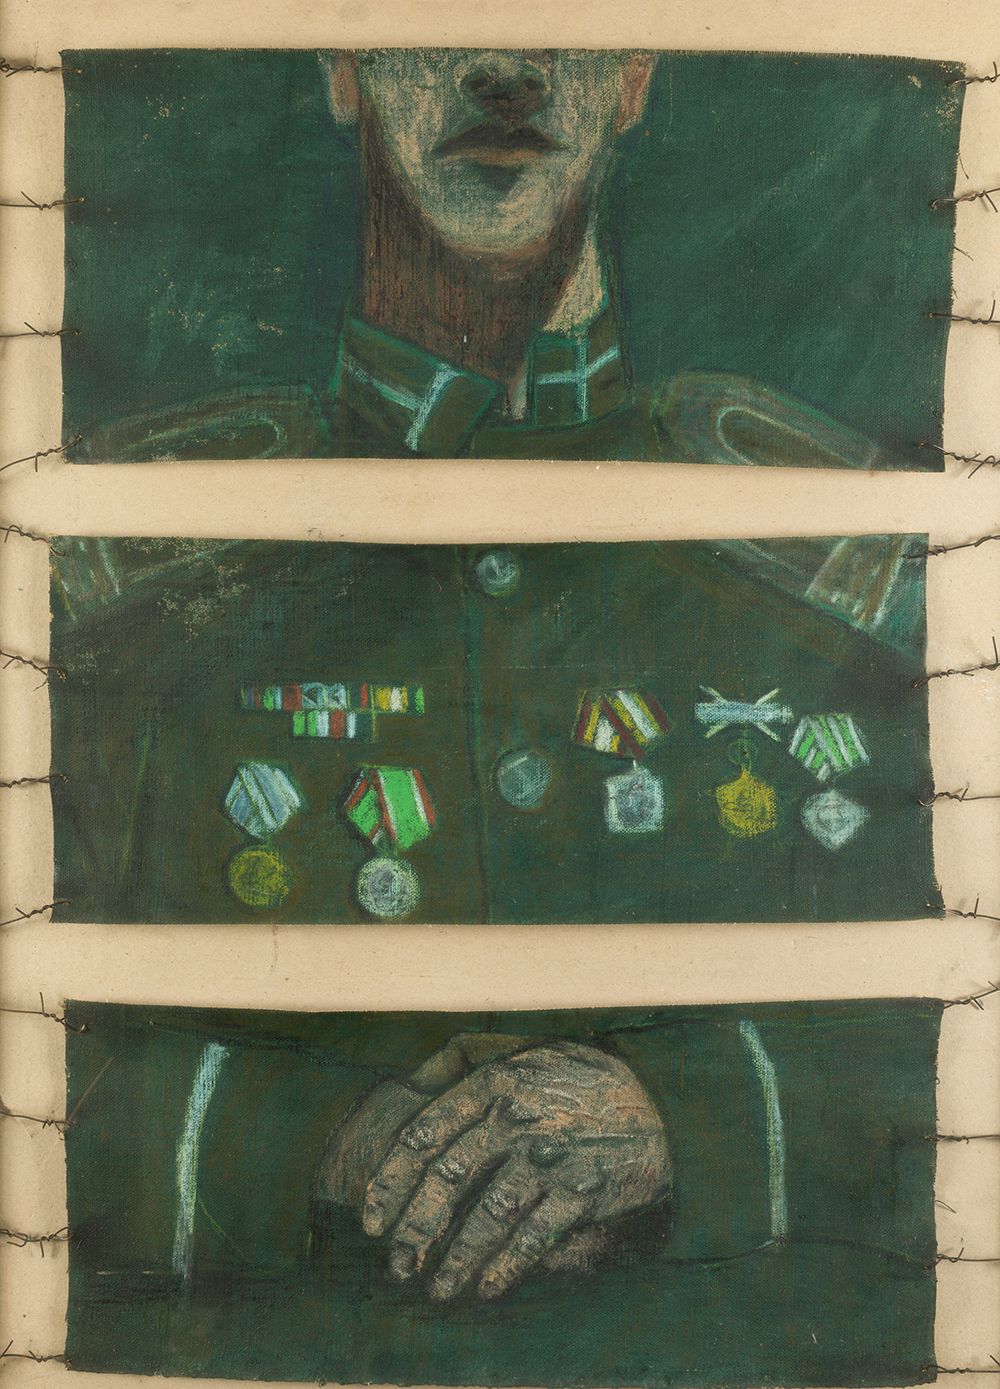 ESCUELA CUBANA (20th century) "Military" .88 x 68厘米。布面油画 担架和钢丝